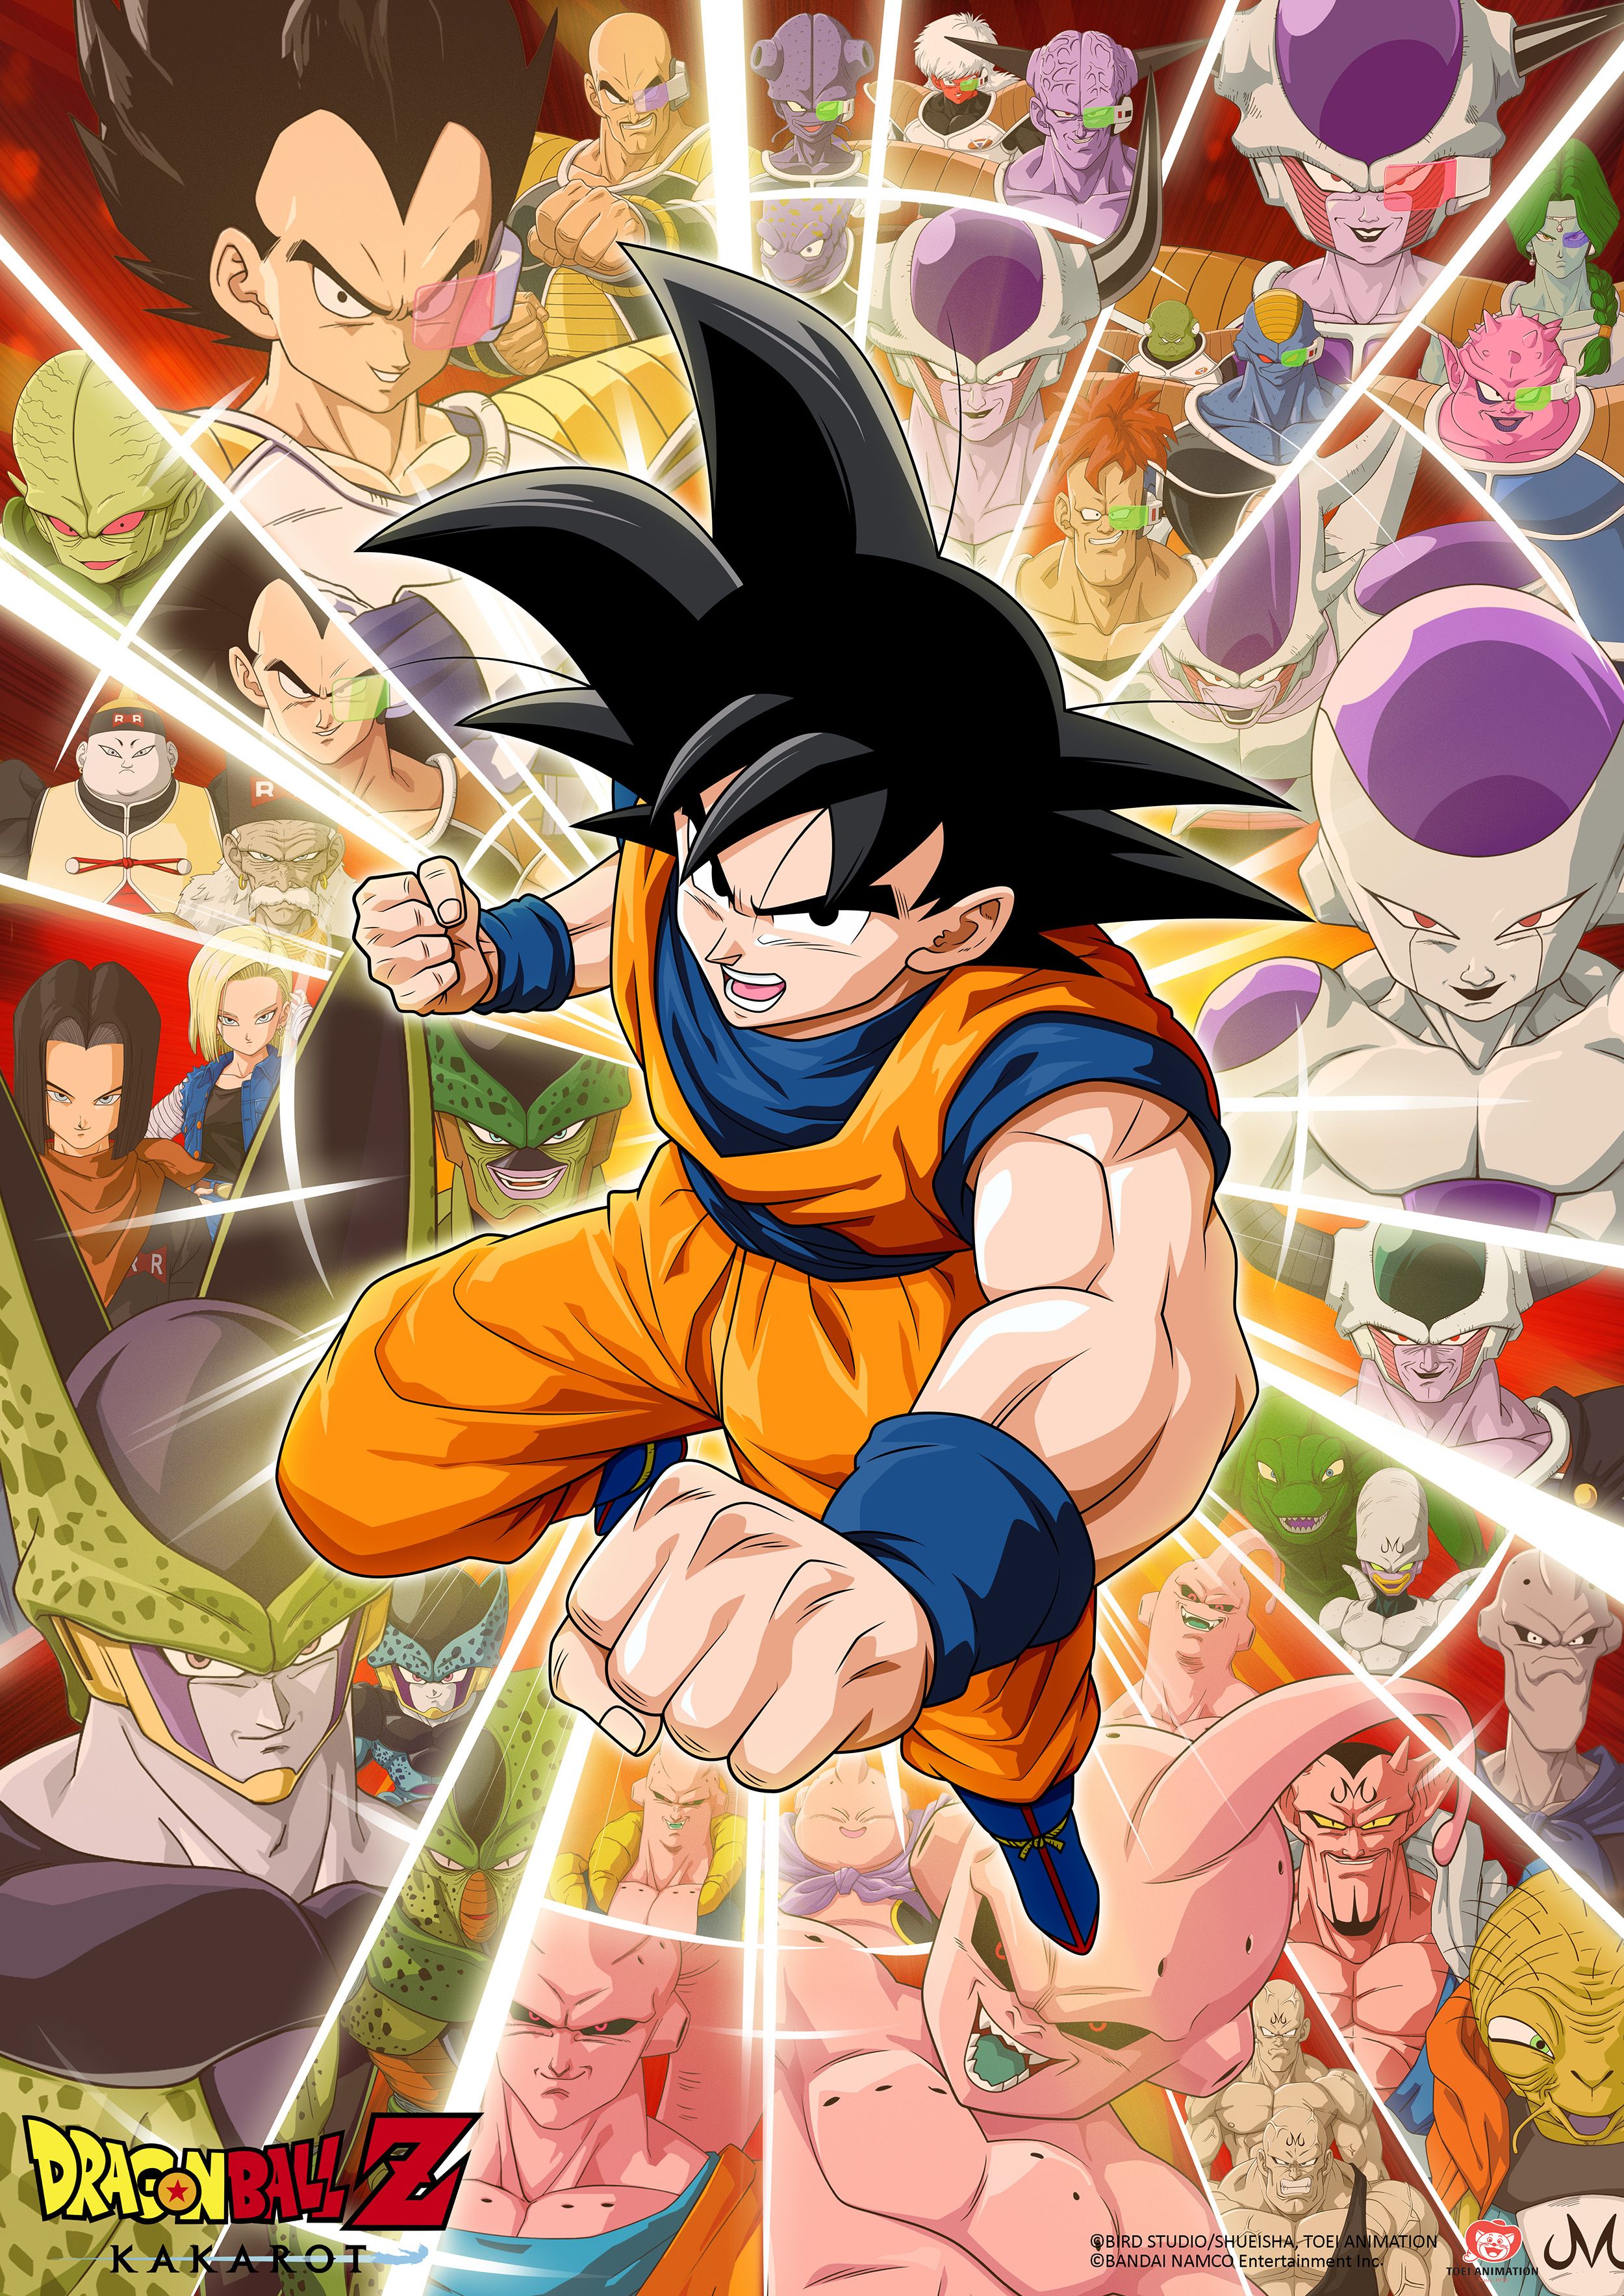 Dragon Ball Z Kakarot Game Poster Wallpaper, HD Games 4K Wallpaper, Image, Photo and Background